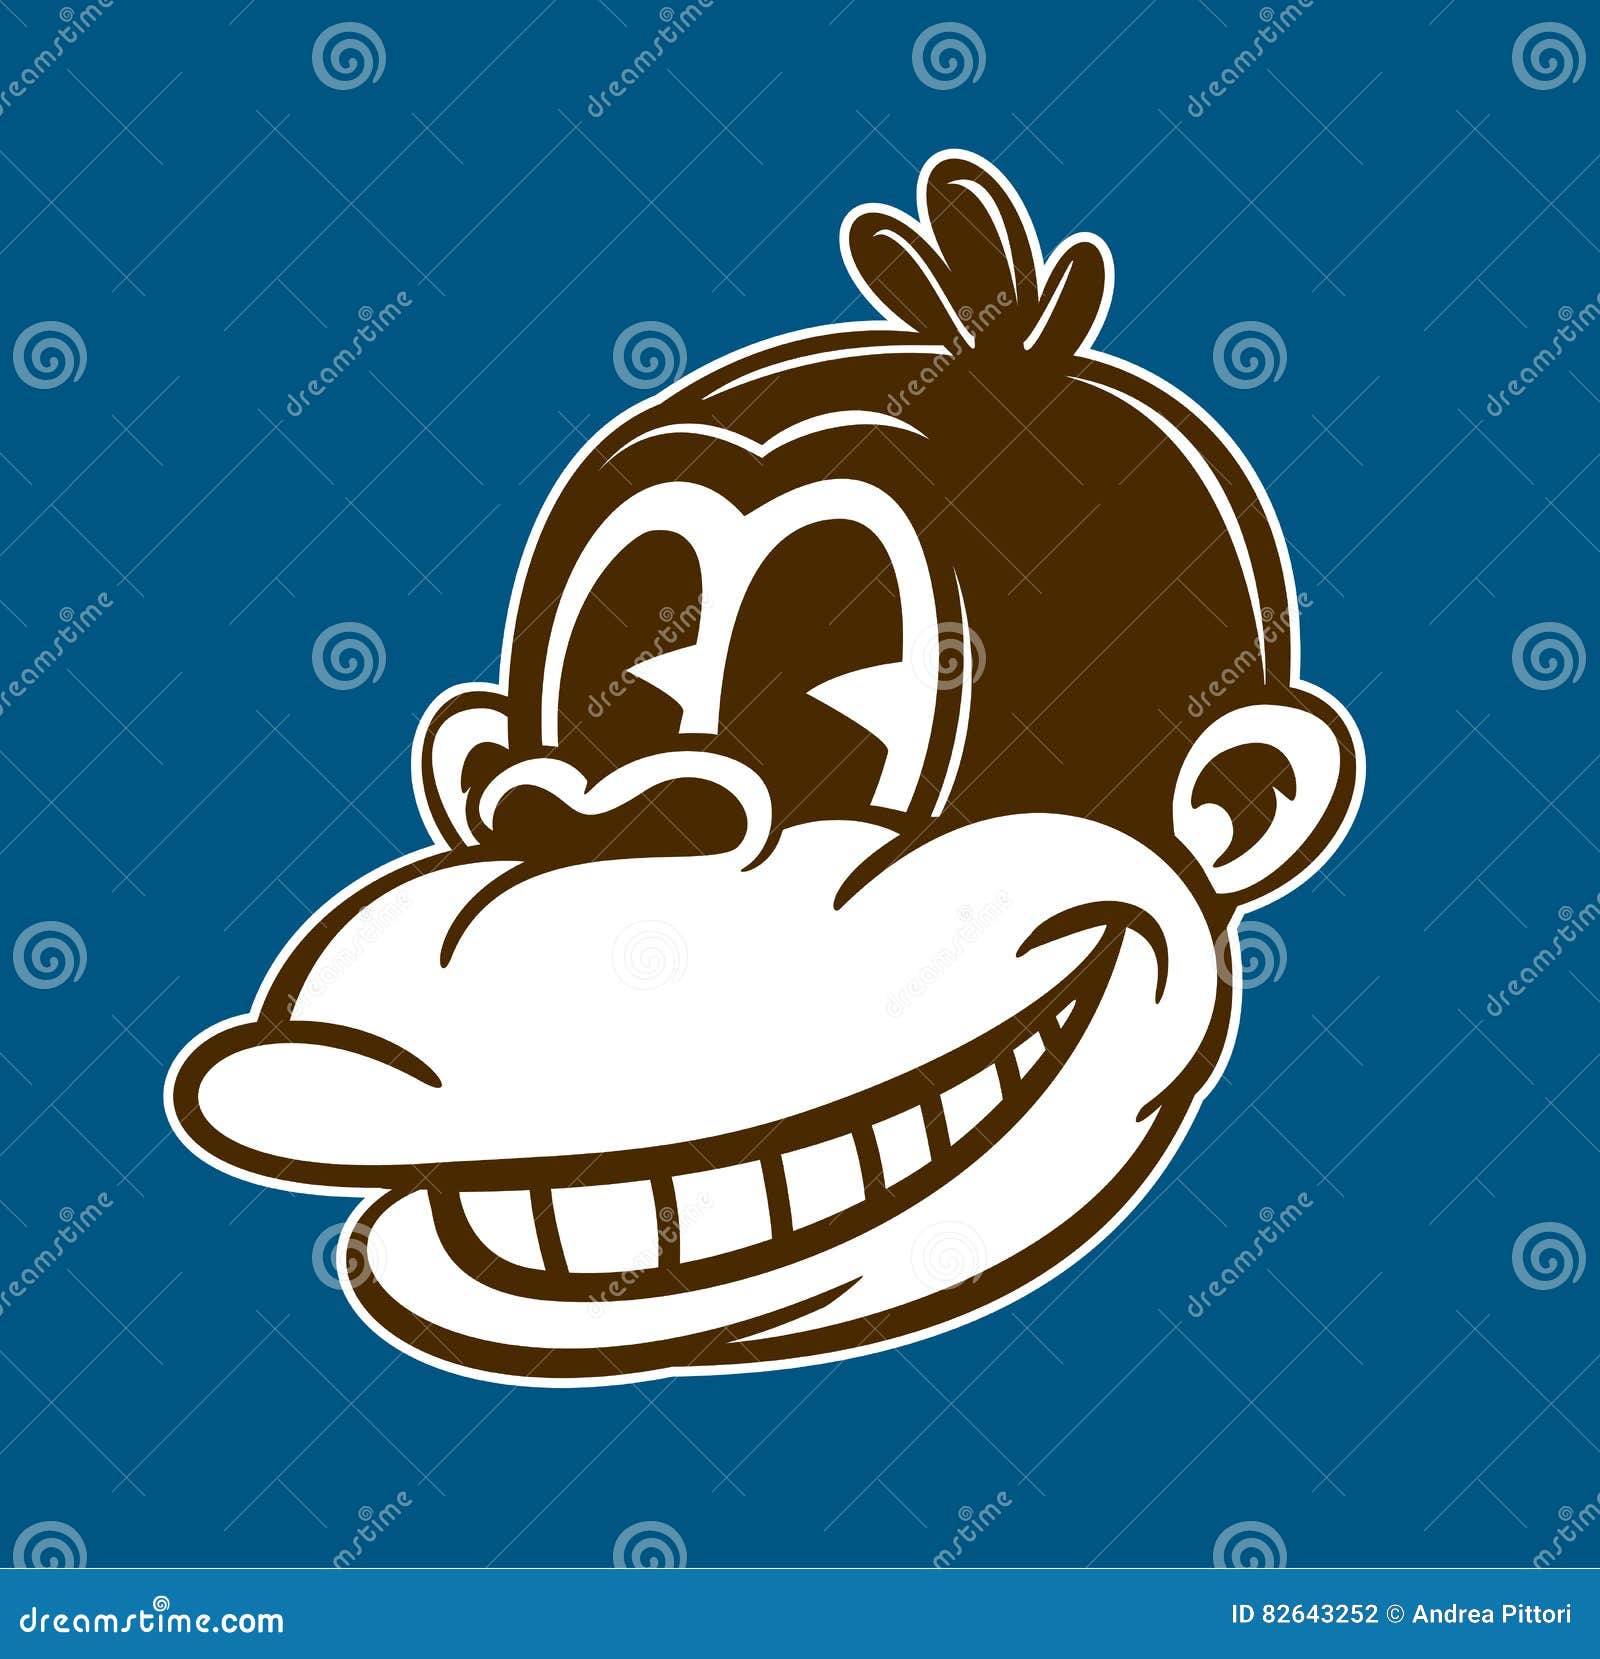 Vintage Toons Cartoon Smiling Monkey Face Vector Illustration Stock Vector  - Illustration of jungle, emotion: 82643252